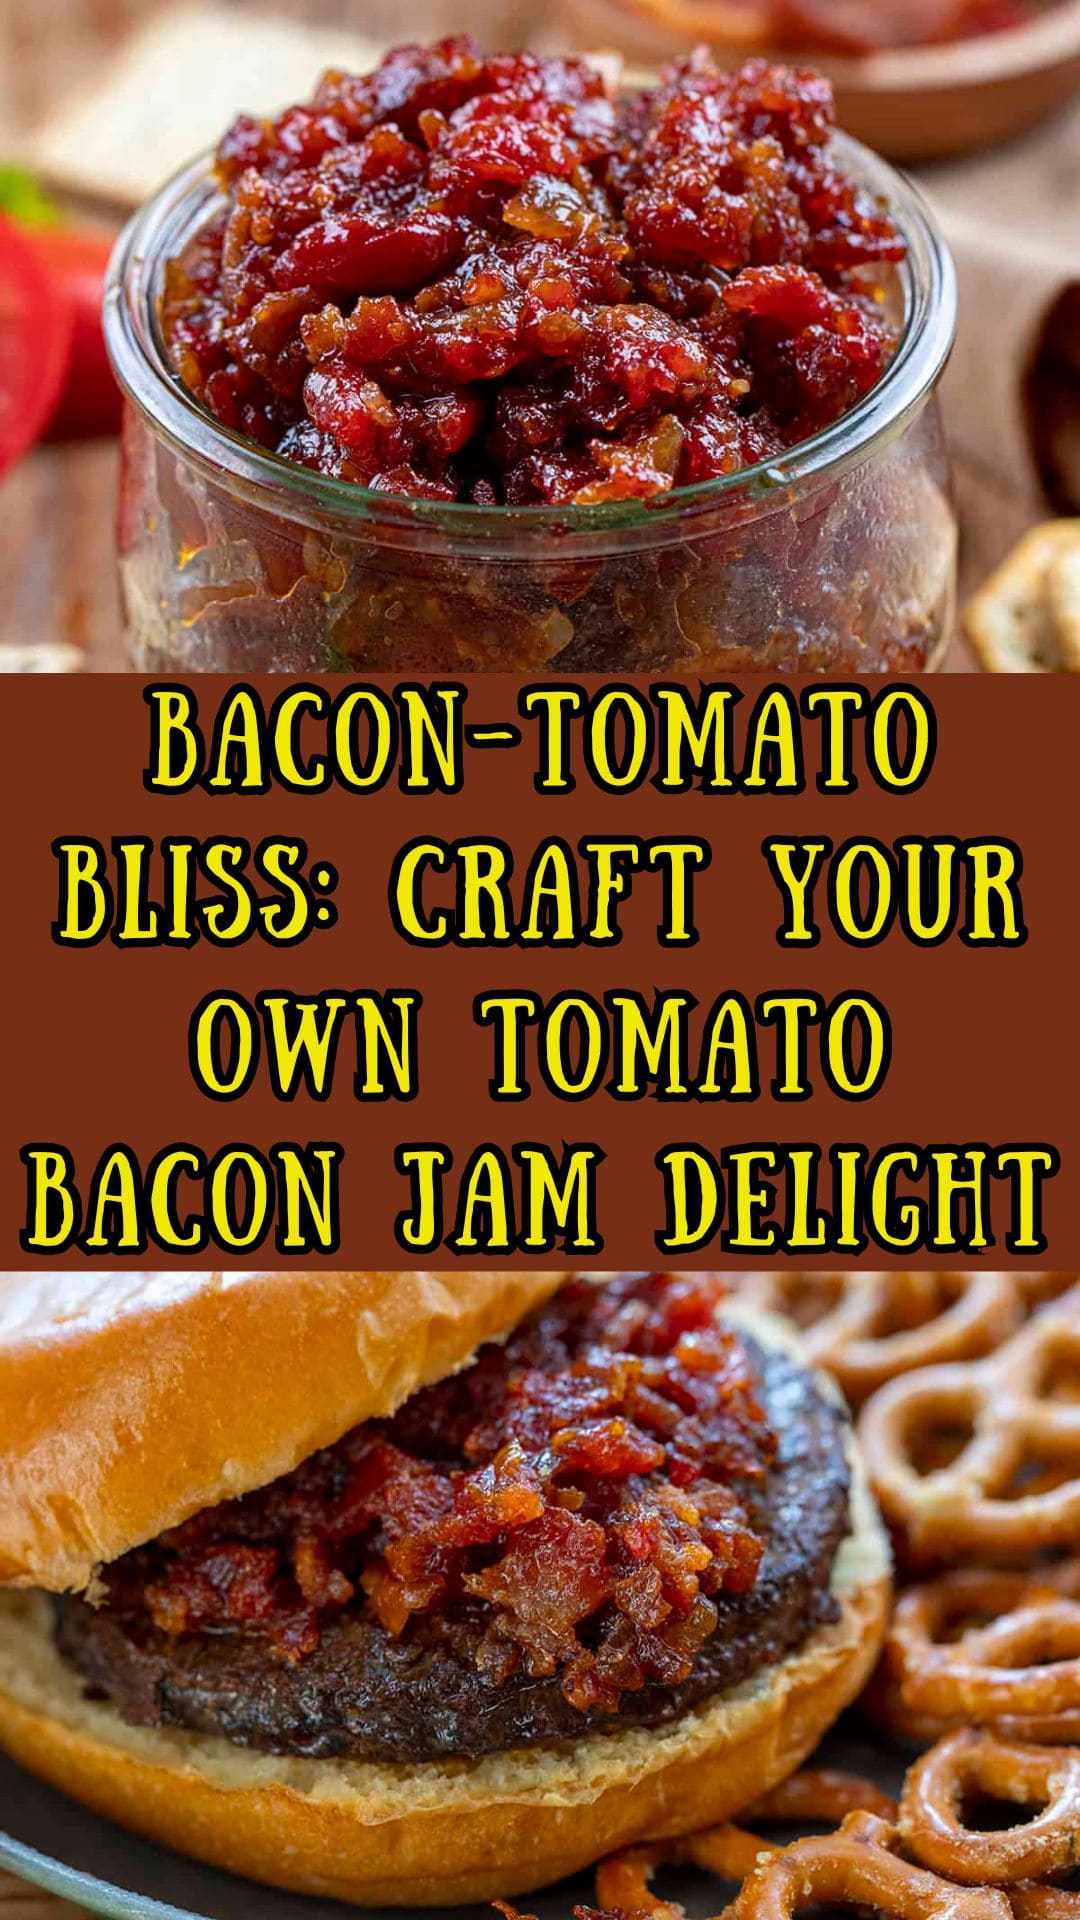 Bacon-Tomato Bliss: Craft Your Own Tomato Bacon Jam Delight